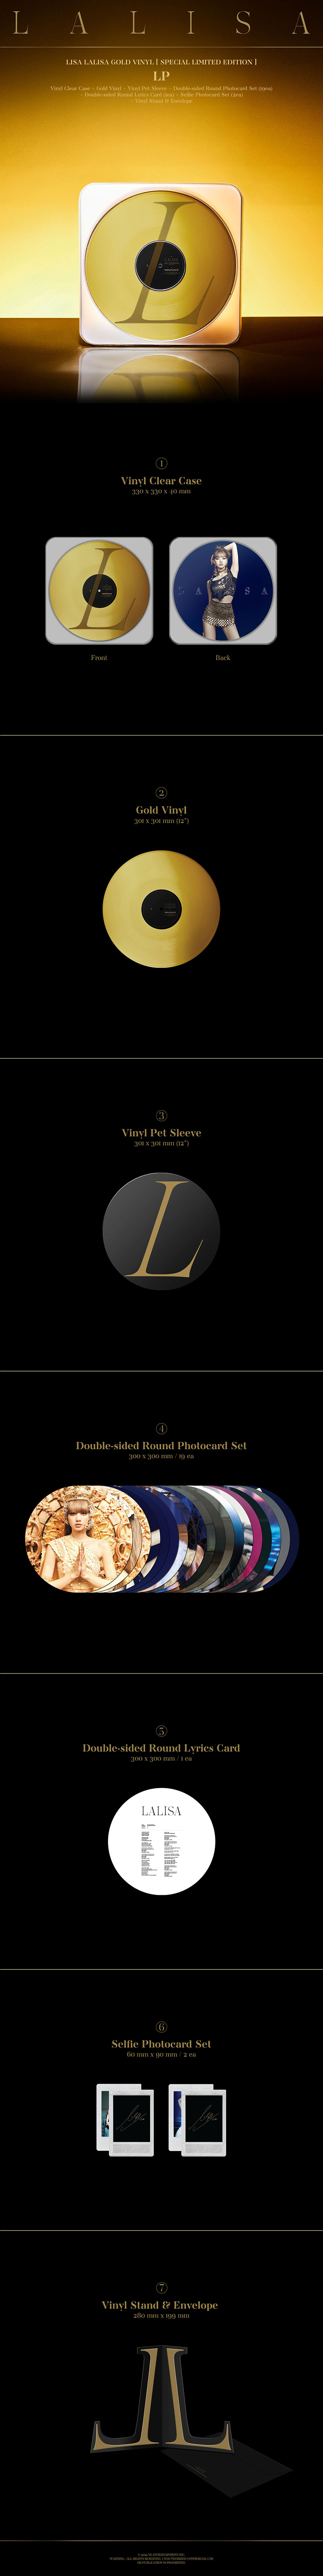 LALISA GOLD VINYL LP Limited Edition-